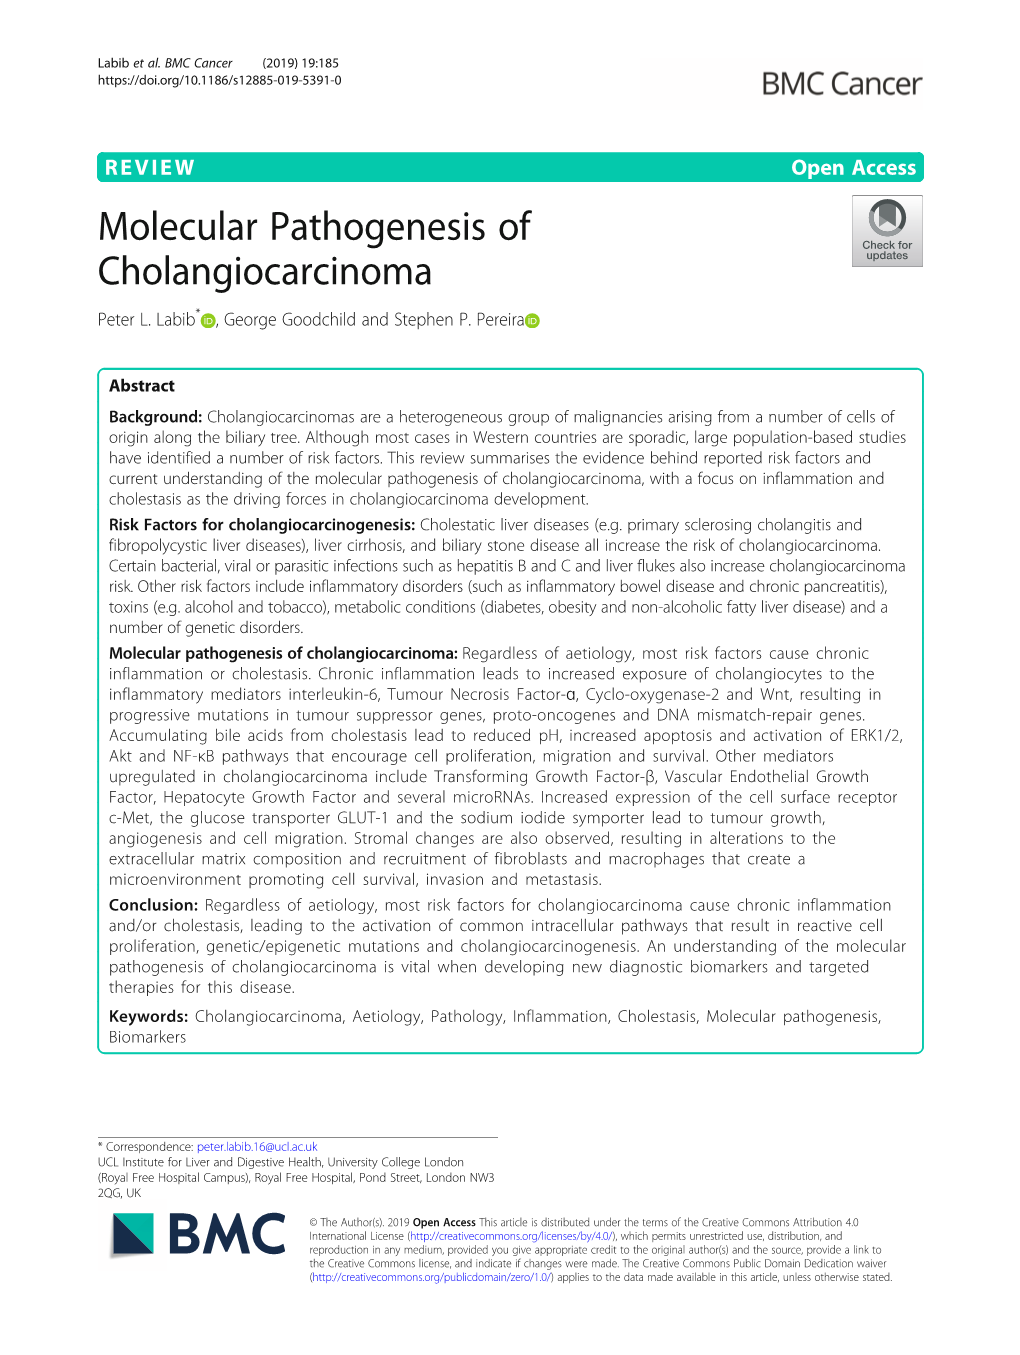 Molecular Pathogenesis of Cholangiocarcinoma Peter L